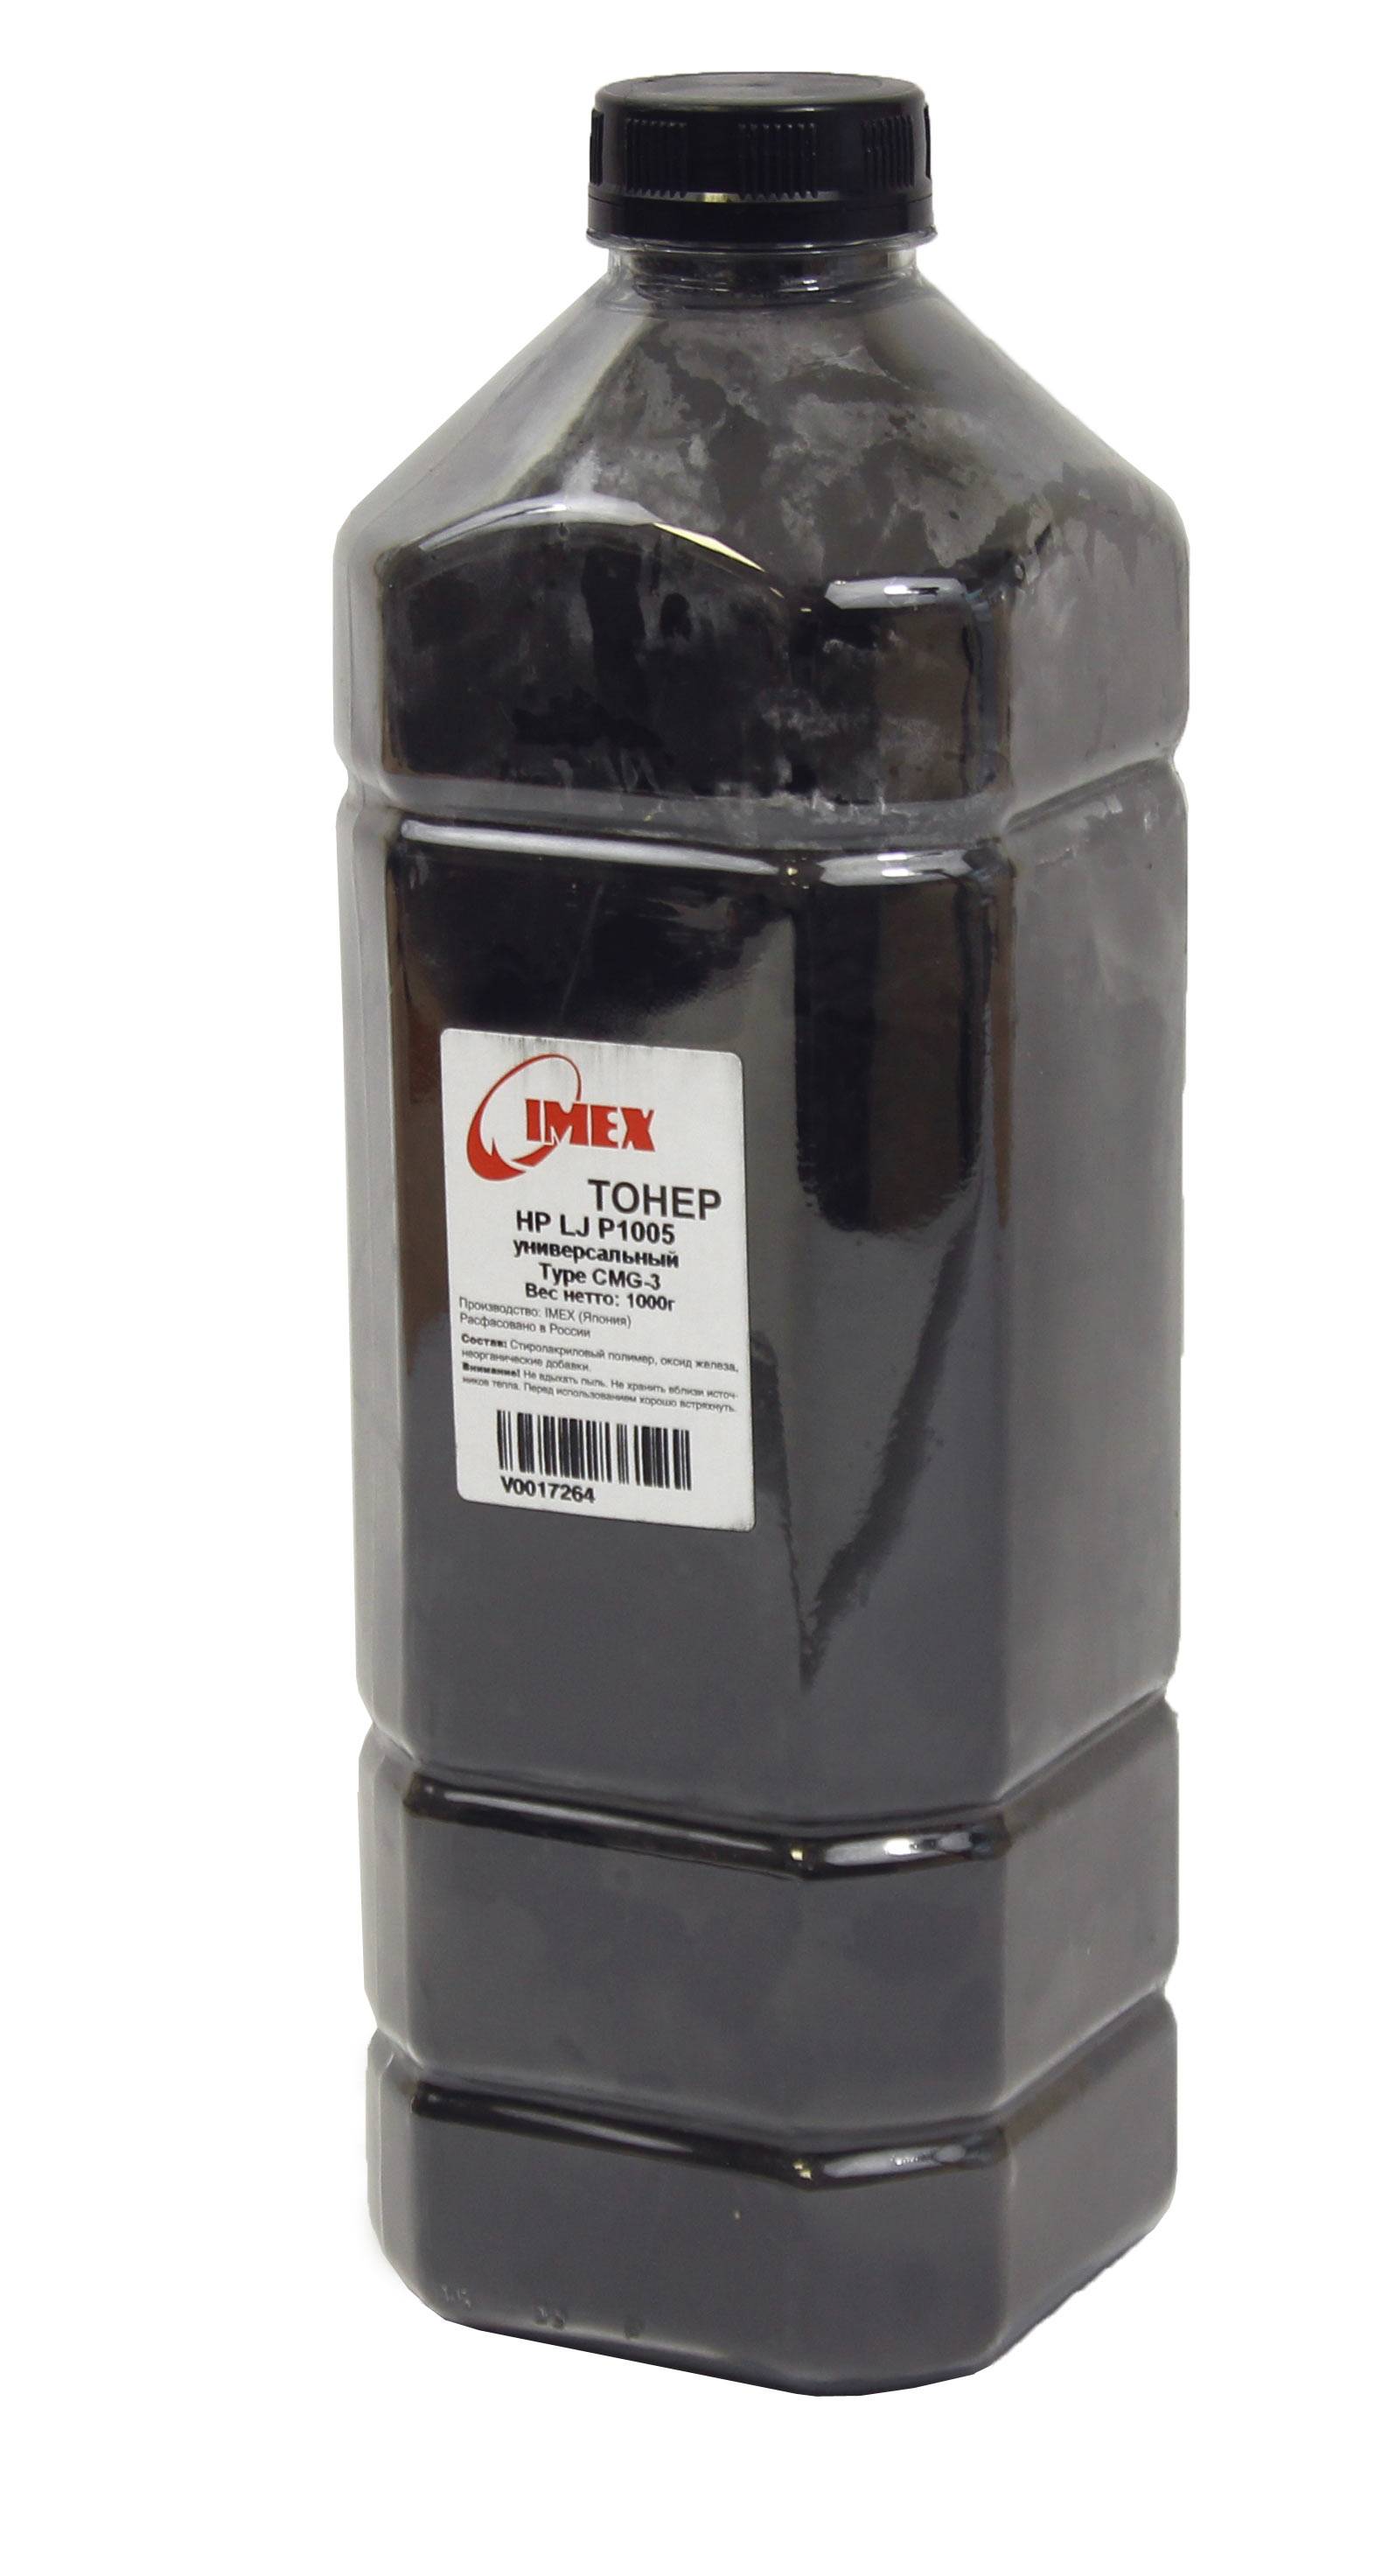 Тонер HP LJ Универсальный P1005 (IMEX) Тип CMG-3, 1 кг, канистра